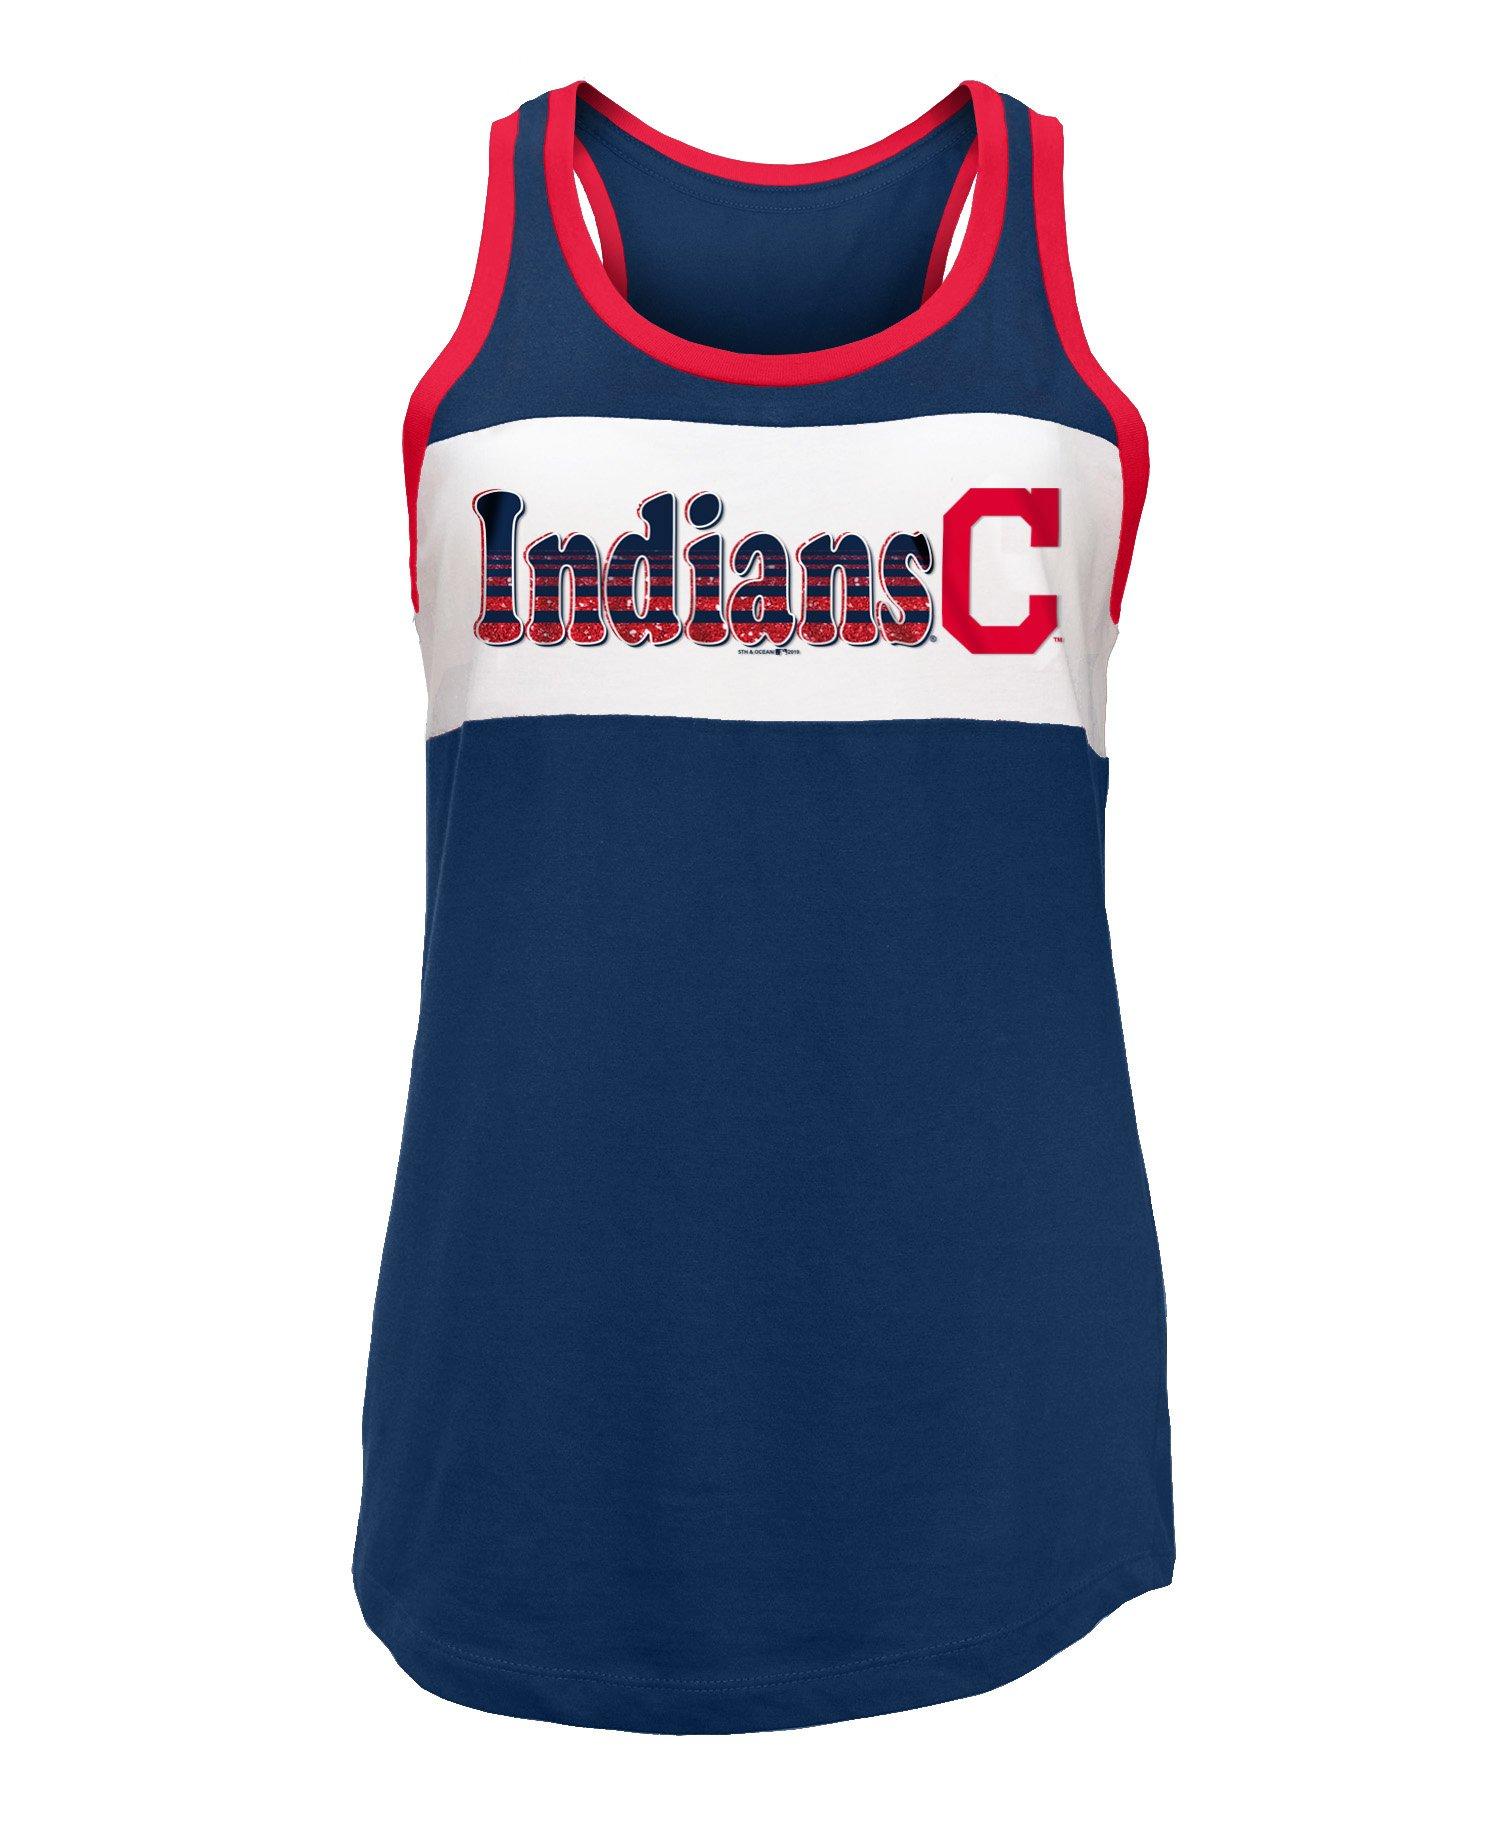 cleveland indians infant jersey